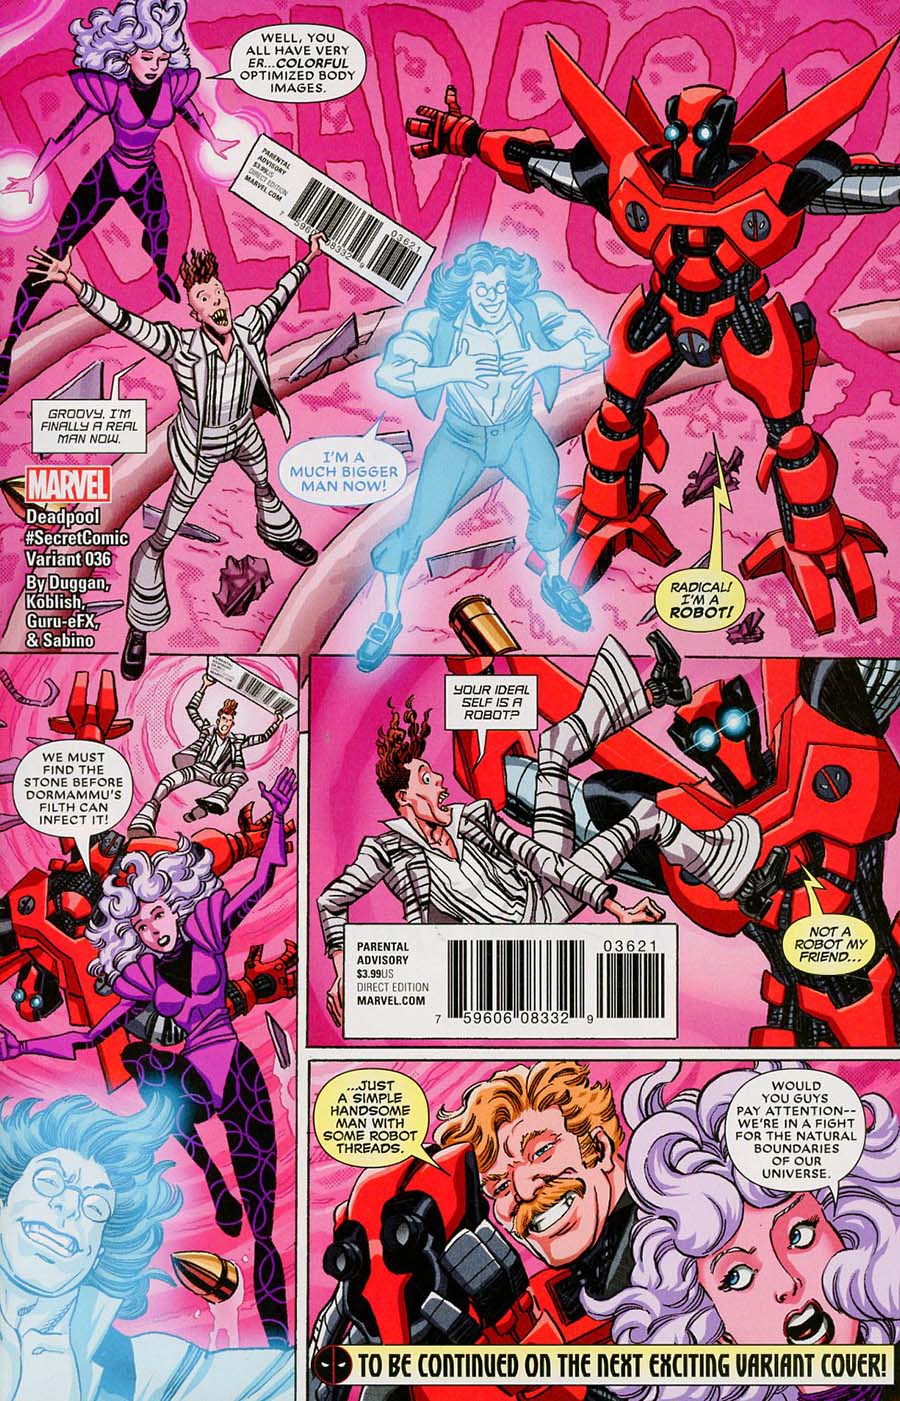 Deadpool Vol 5 #36 Cover B Variant Scott Koblish Secret Comic Cover (Secret Empire Epilogue)